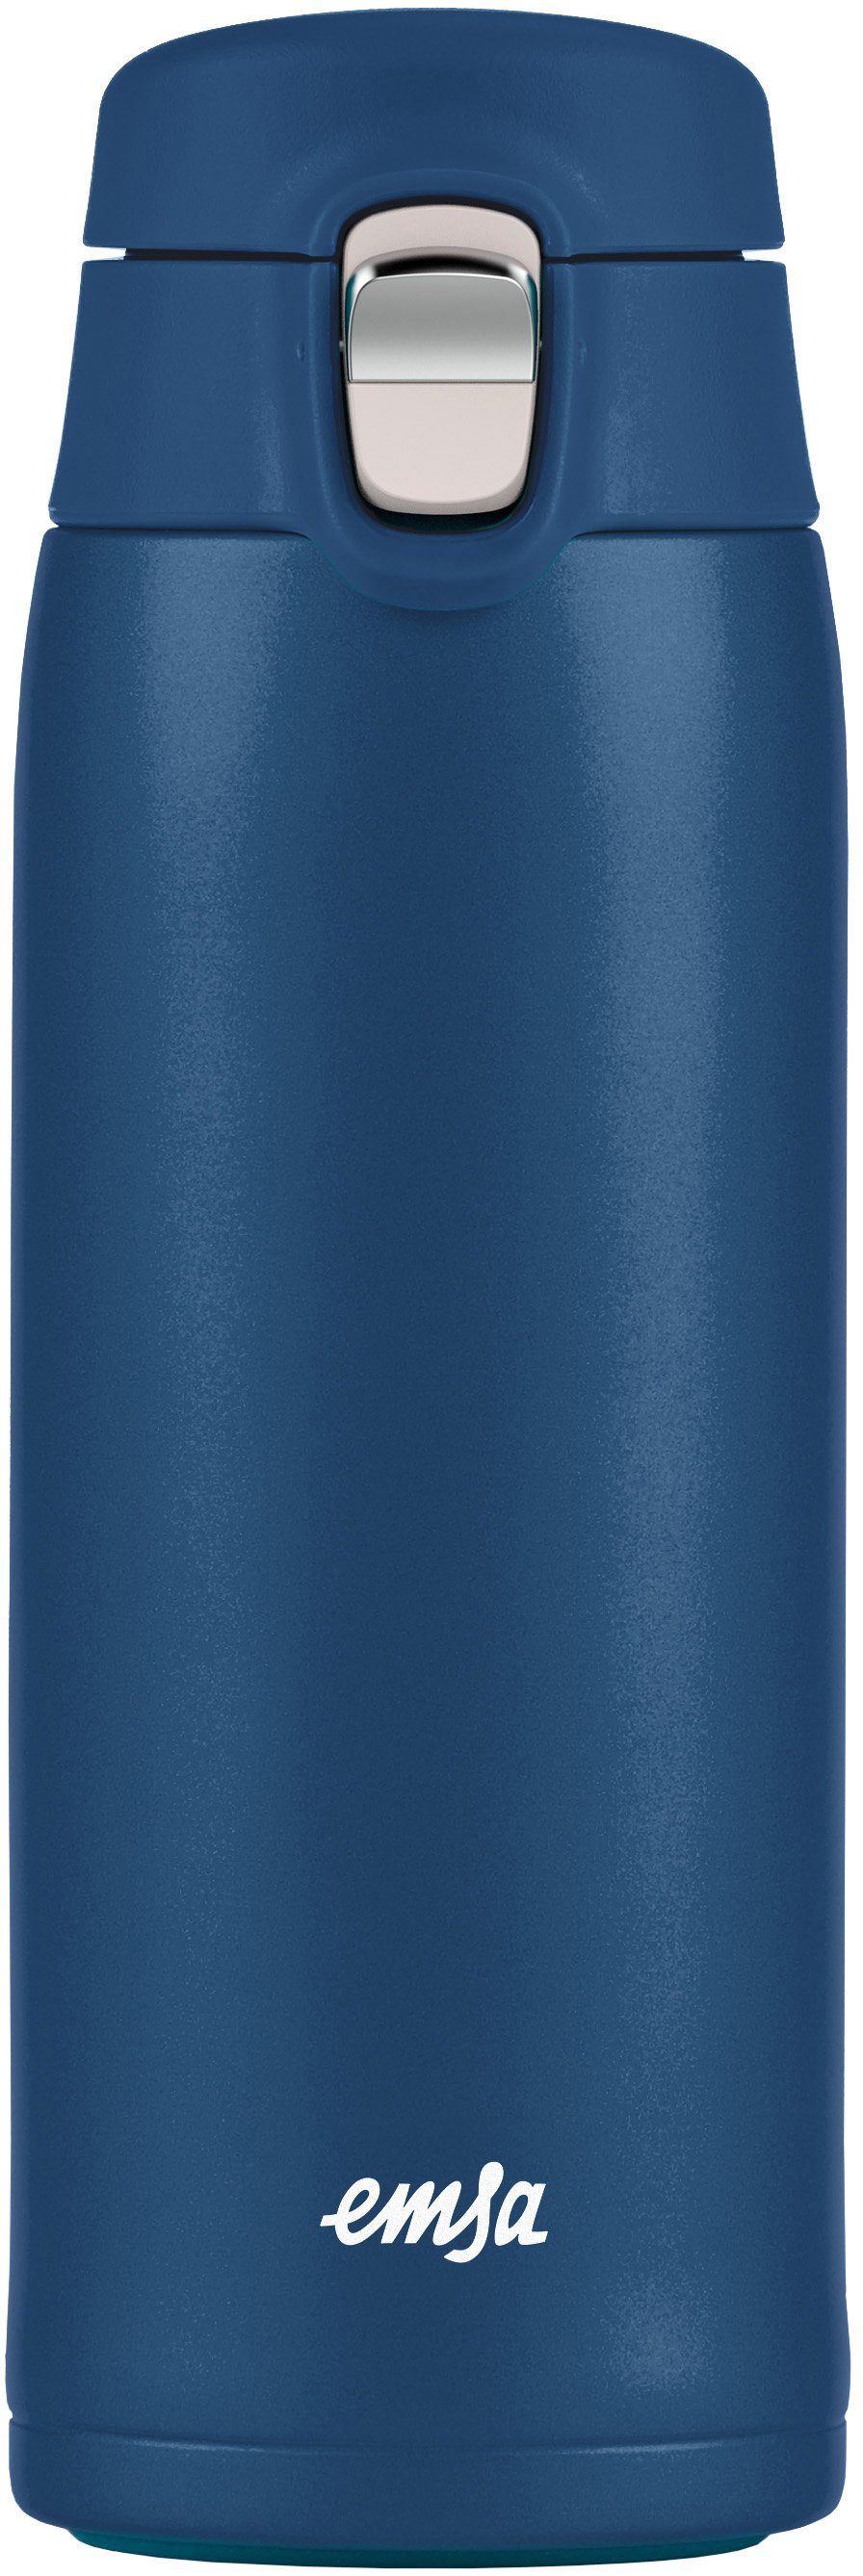 Edelstahl, Thermobecher Light, Travel warm/16h Emsa blau Kunststoff, 8h Mug 100% Edelstahl, kalt 0,4L, dicht,